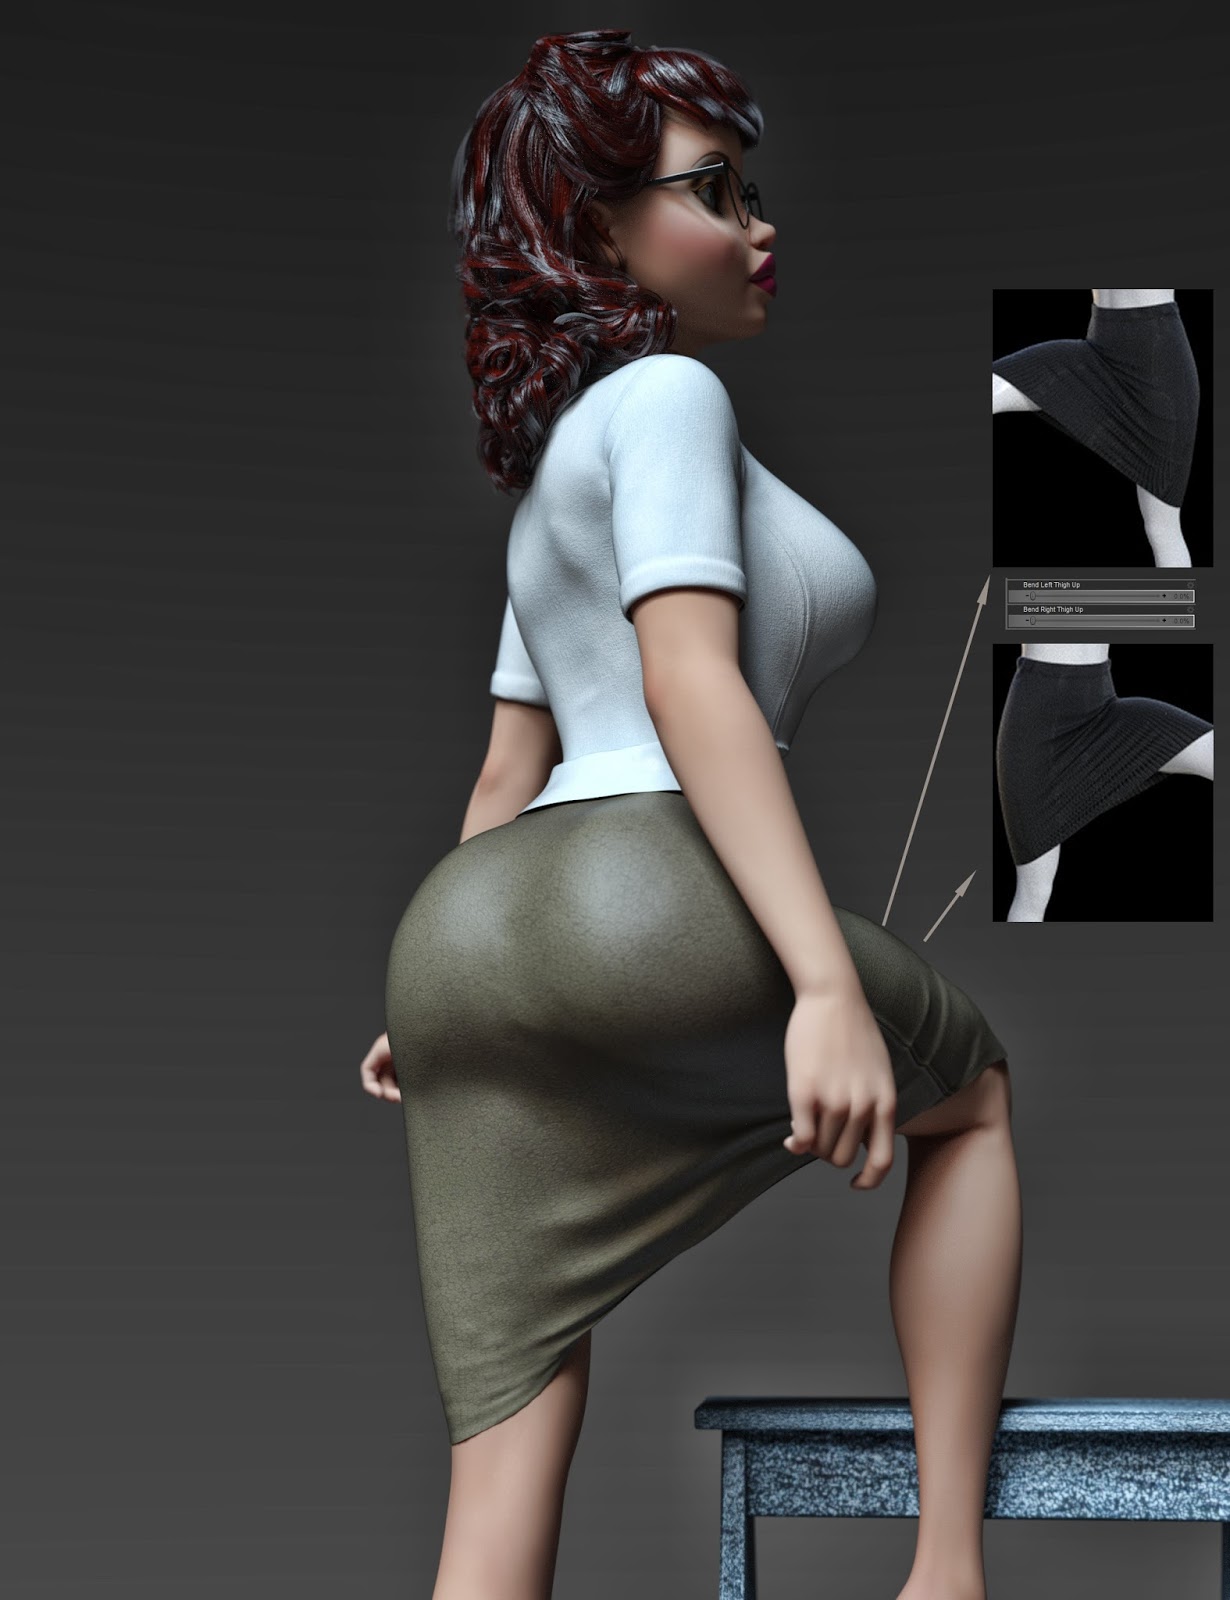 3d animation big butt